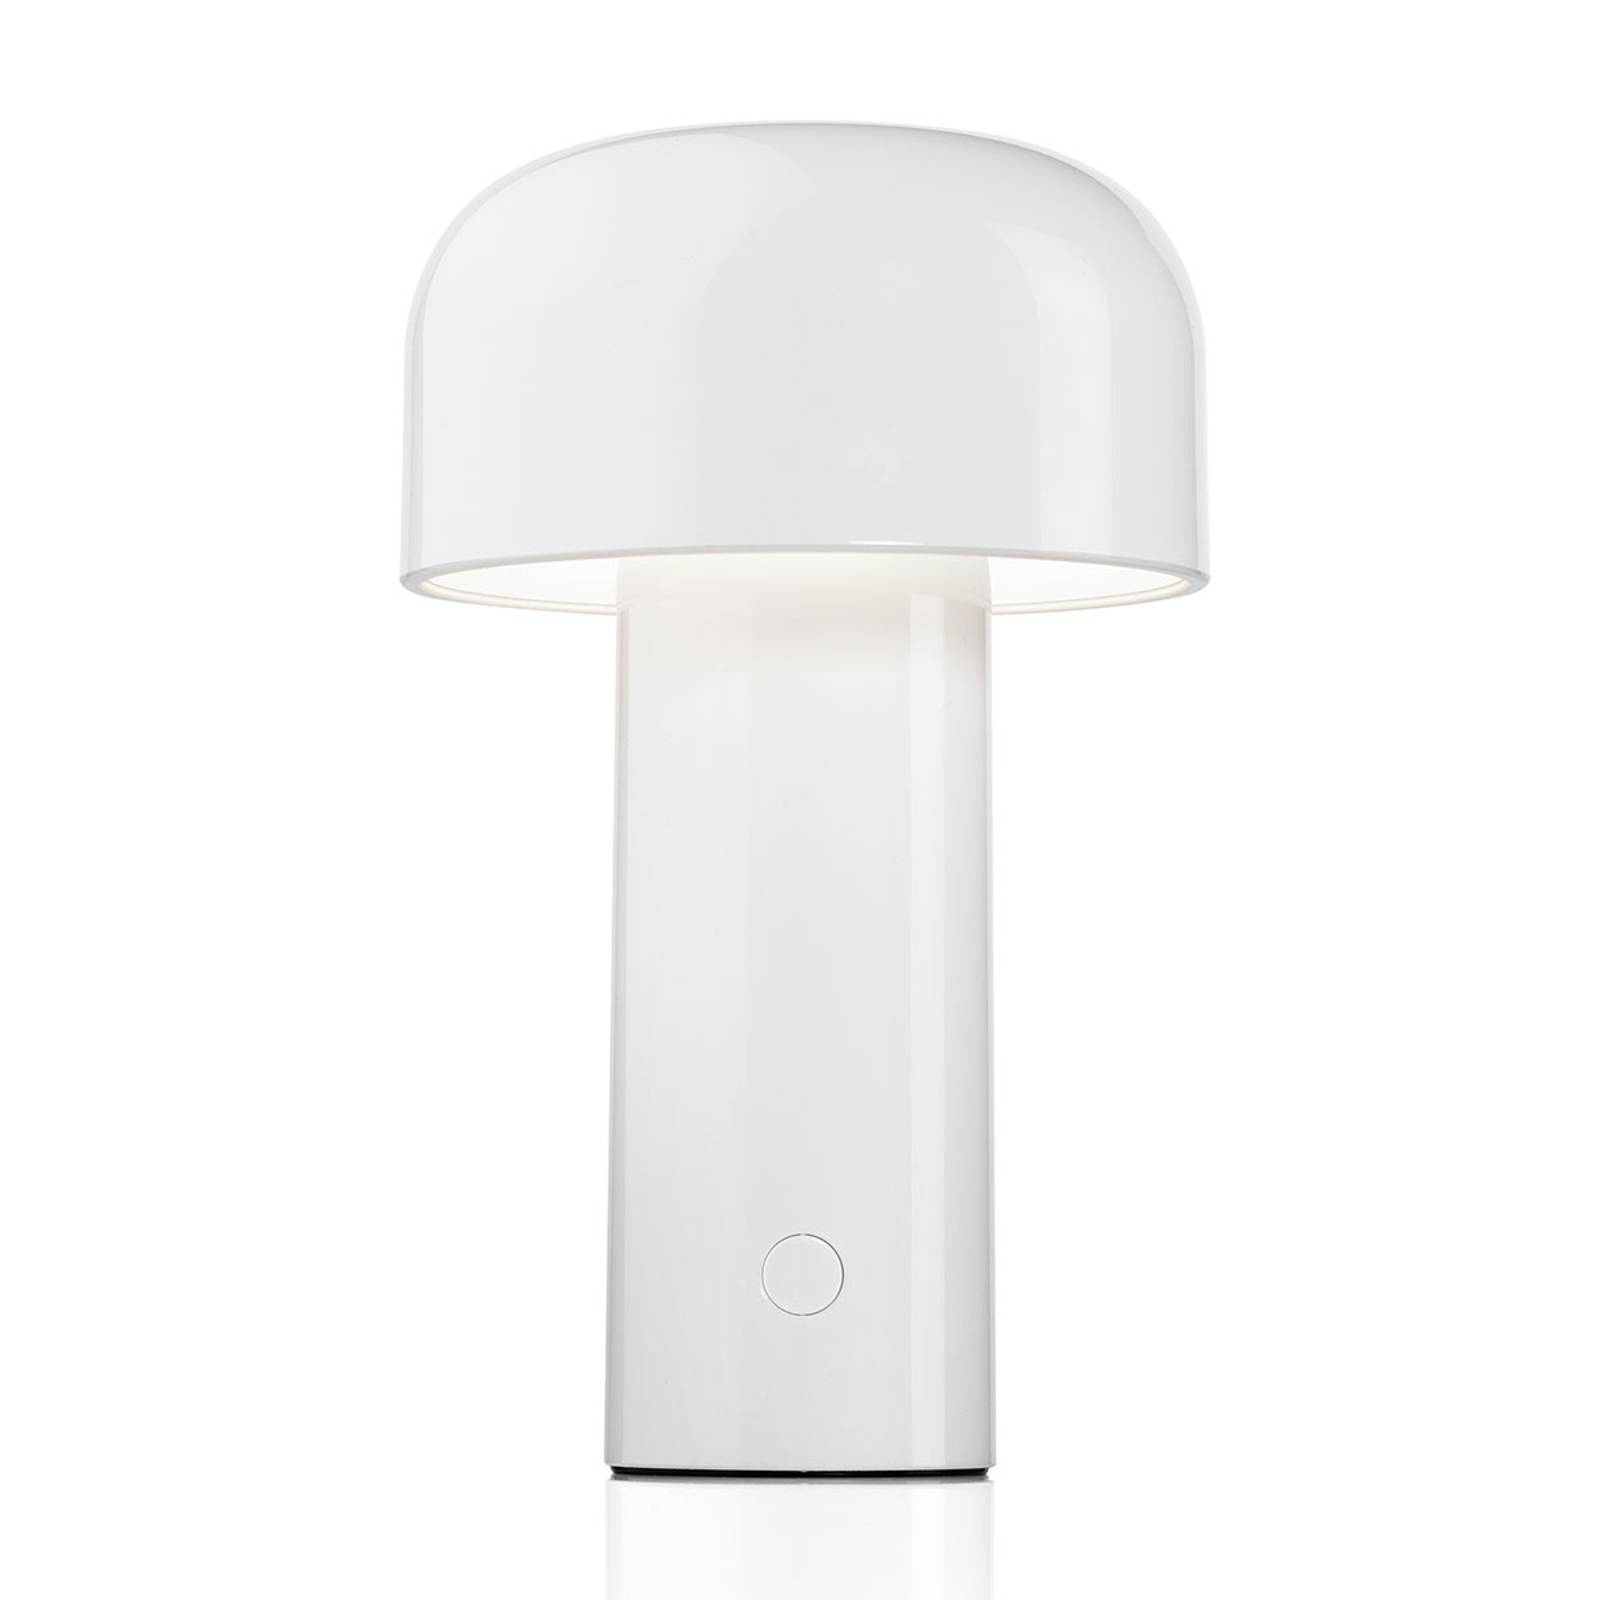 FLOS Bellhop stolová LED lampa, biela